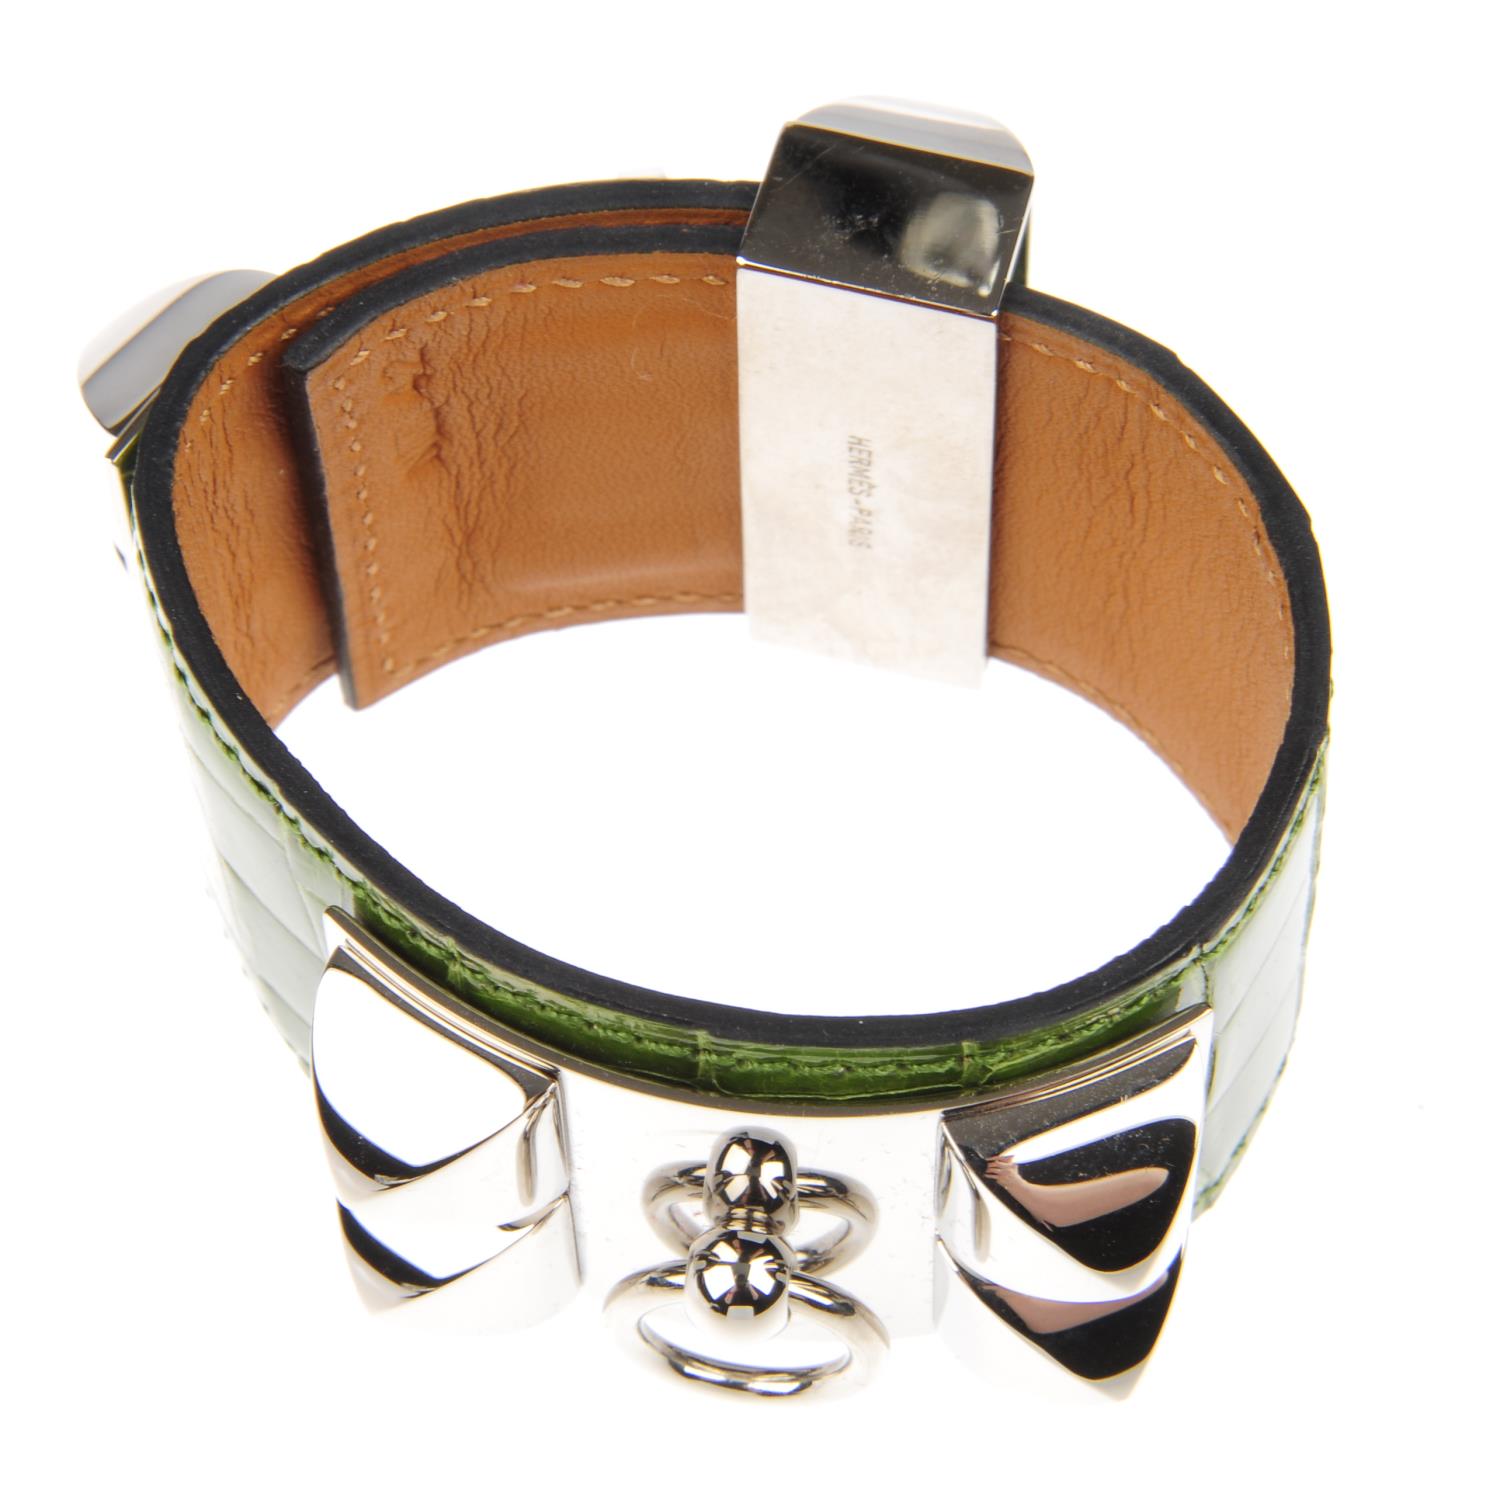 HERMÈS - a 'Collier de Chein' cuff bracelet. - Image 2 of 5